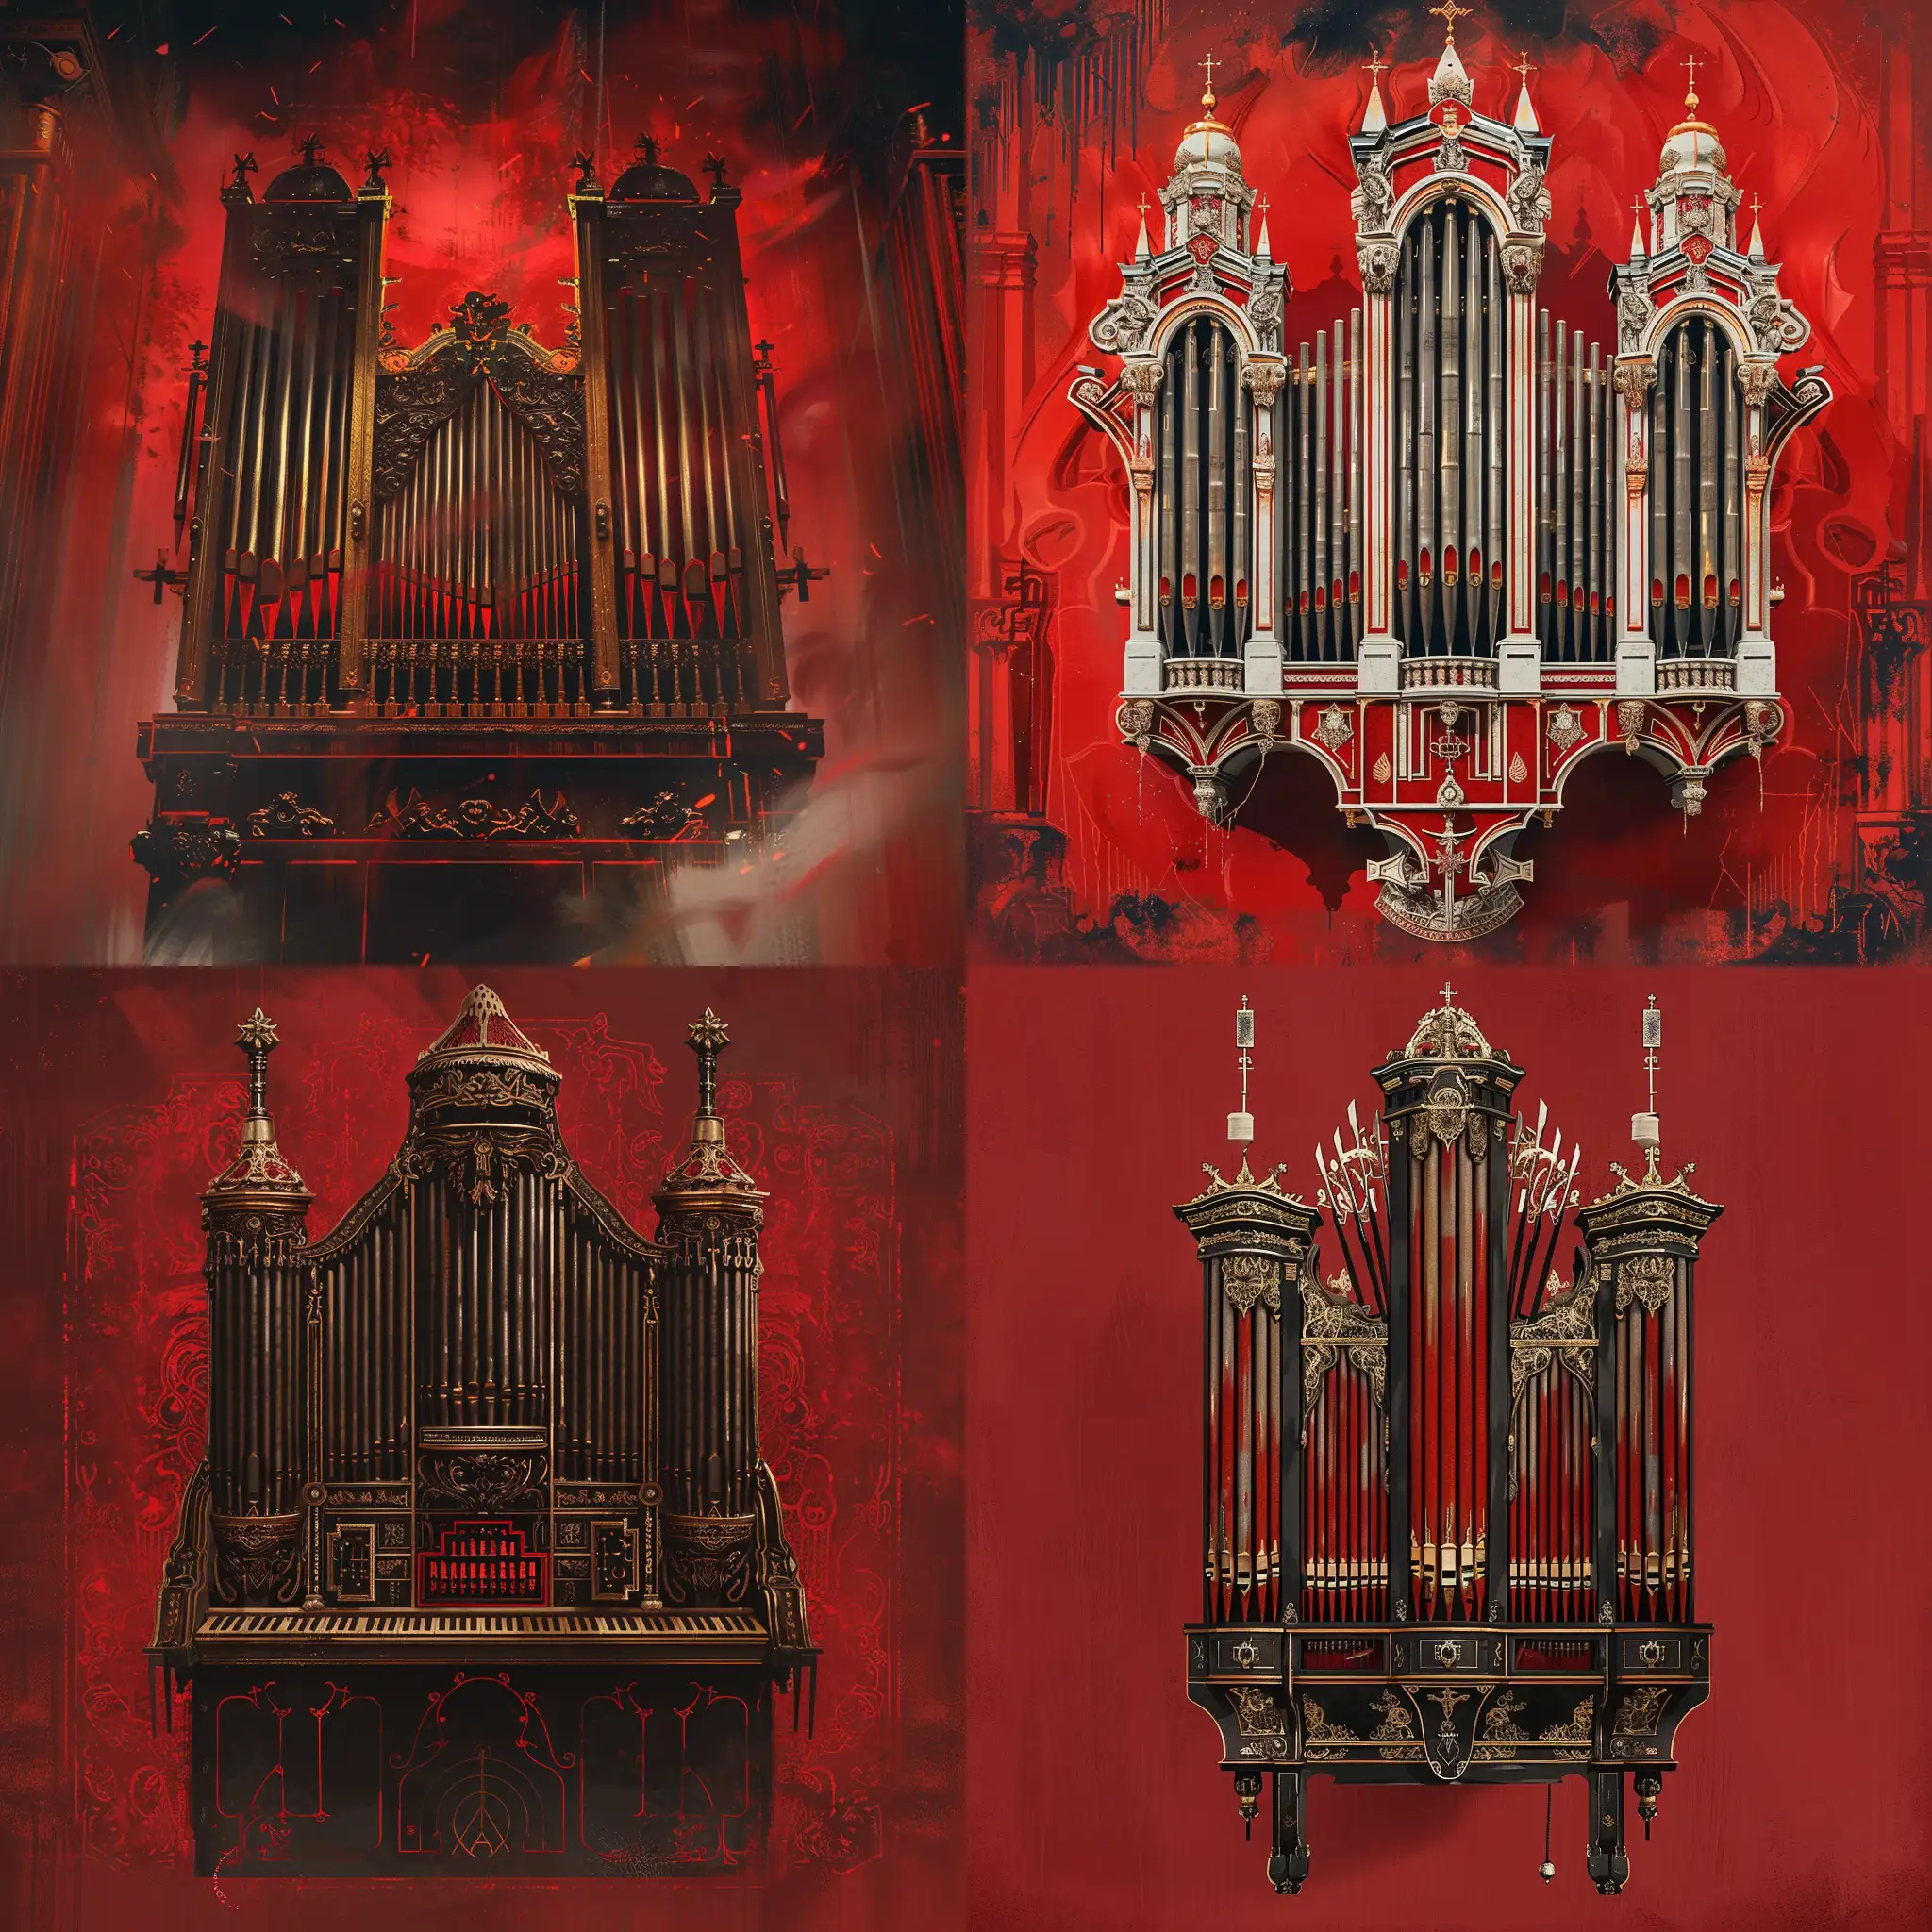 Epic-Slavic-Organ-Digital-Painting-on-Red-Background